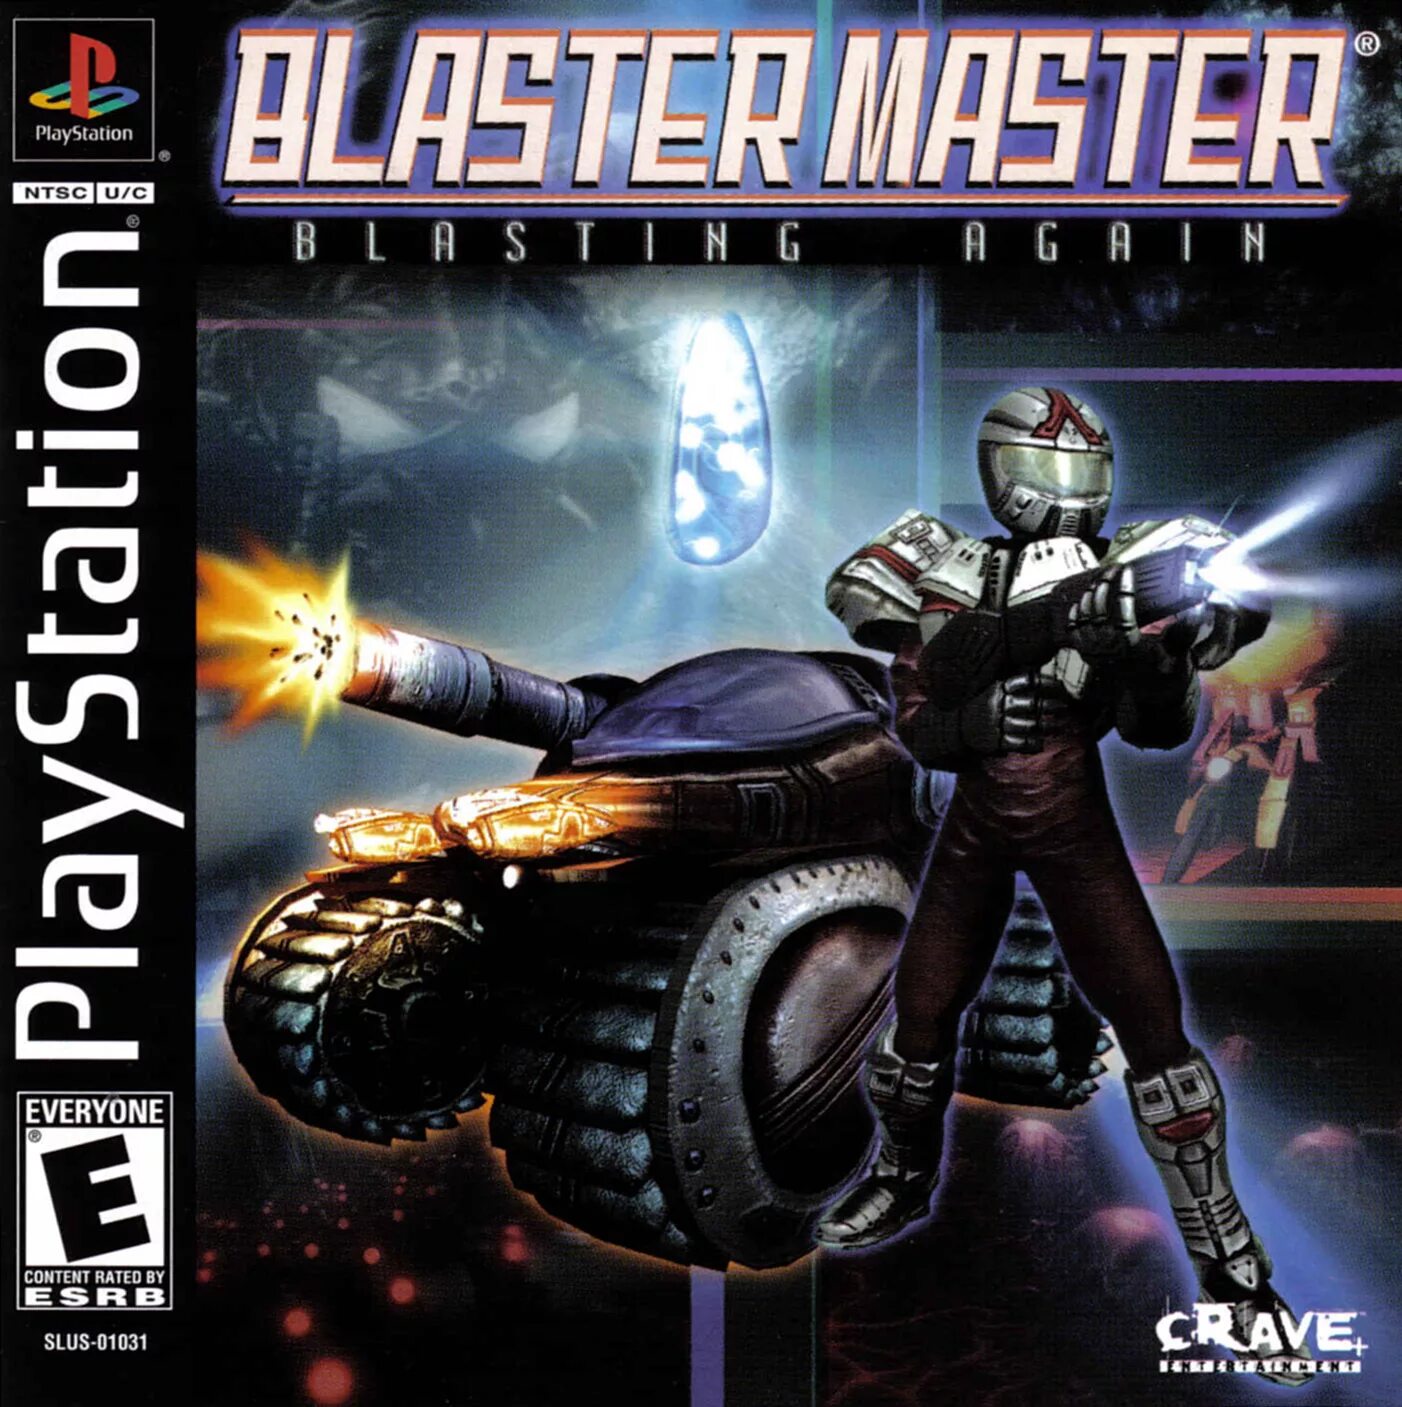 Blaster ps1. Blaster Master Blasting again. Master Blaster игра. Бластер мастер PS 1.